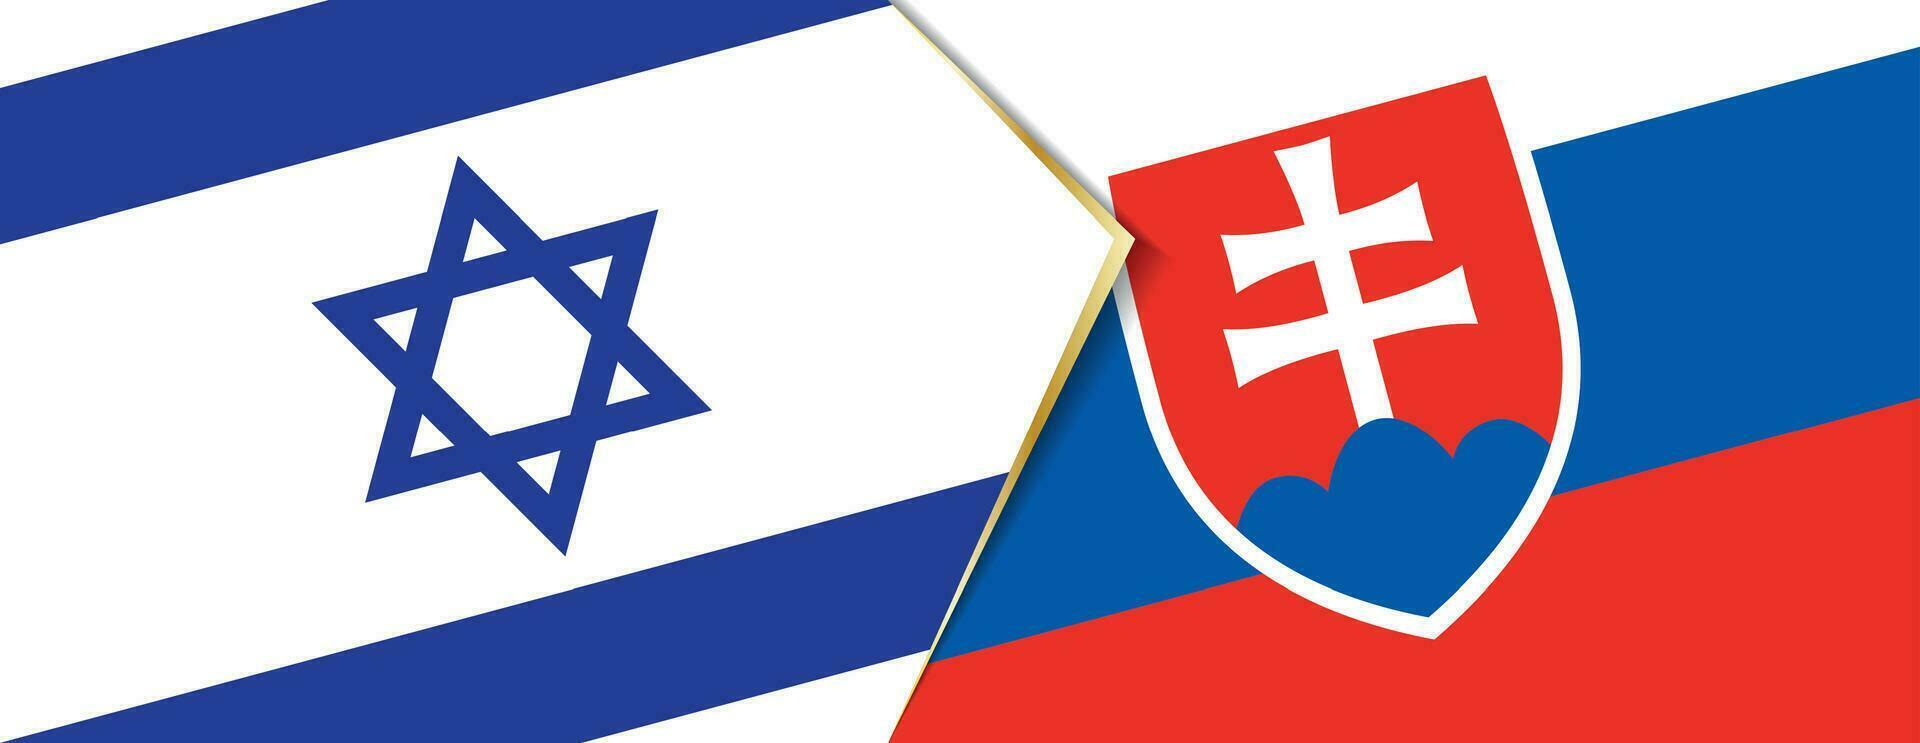 Israel und Slowakei Flaggen, zwei Vektor Flaggen.